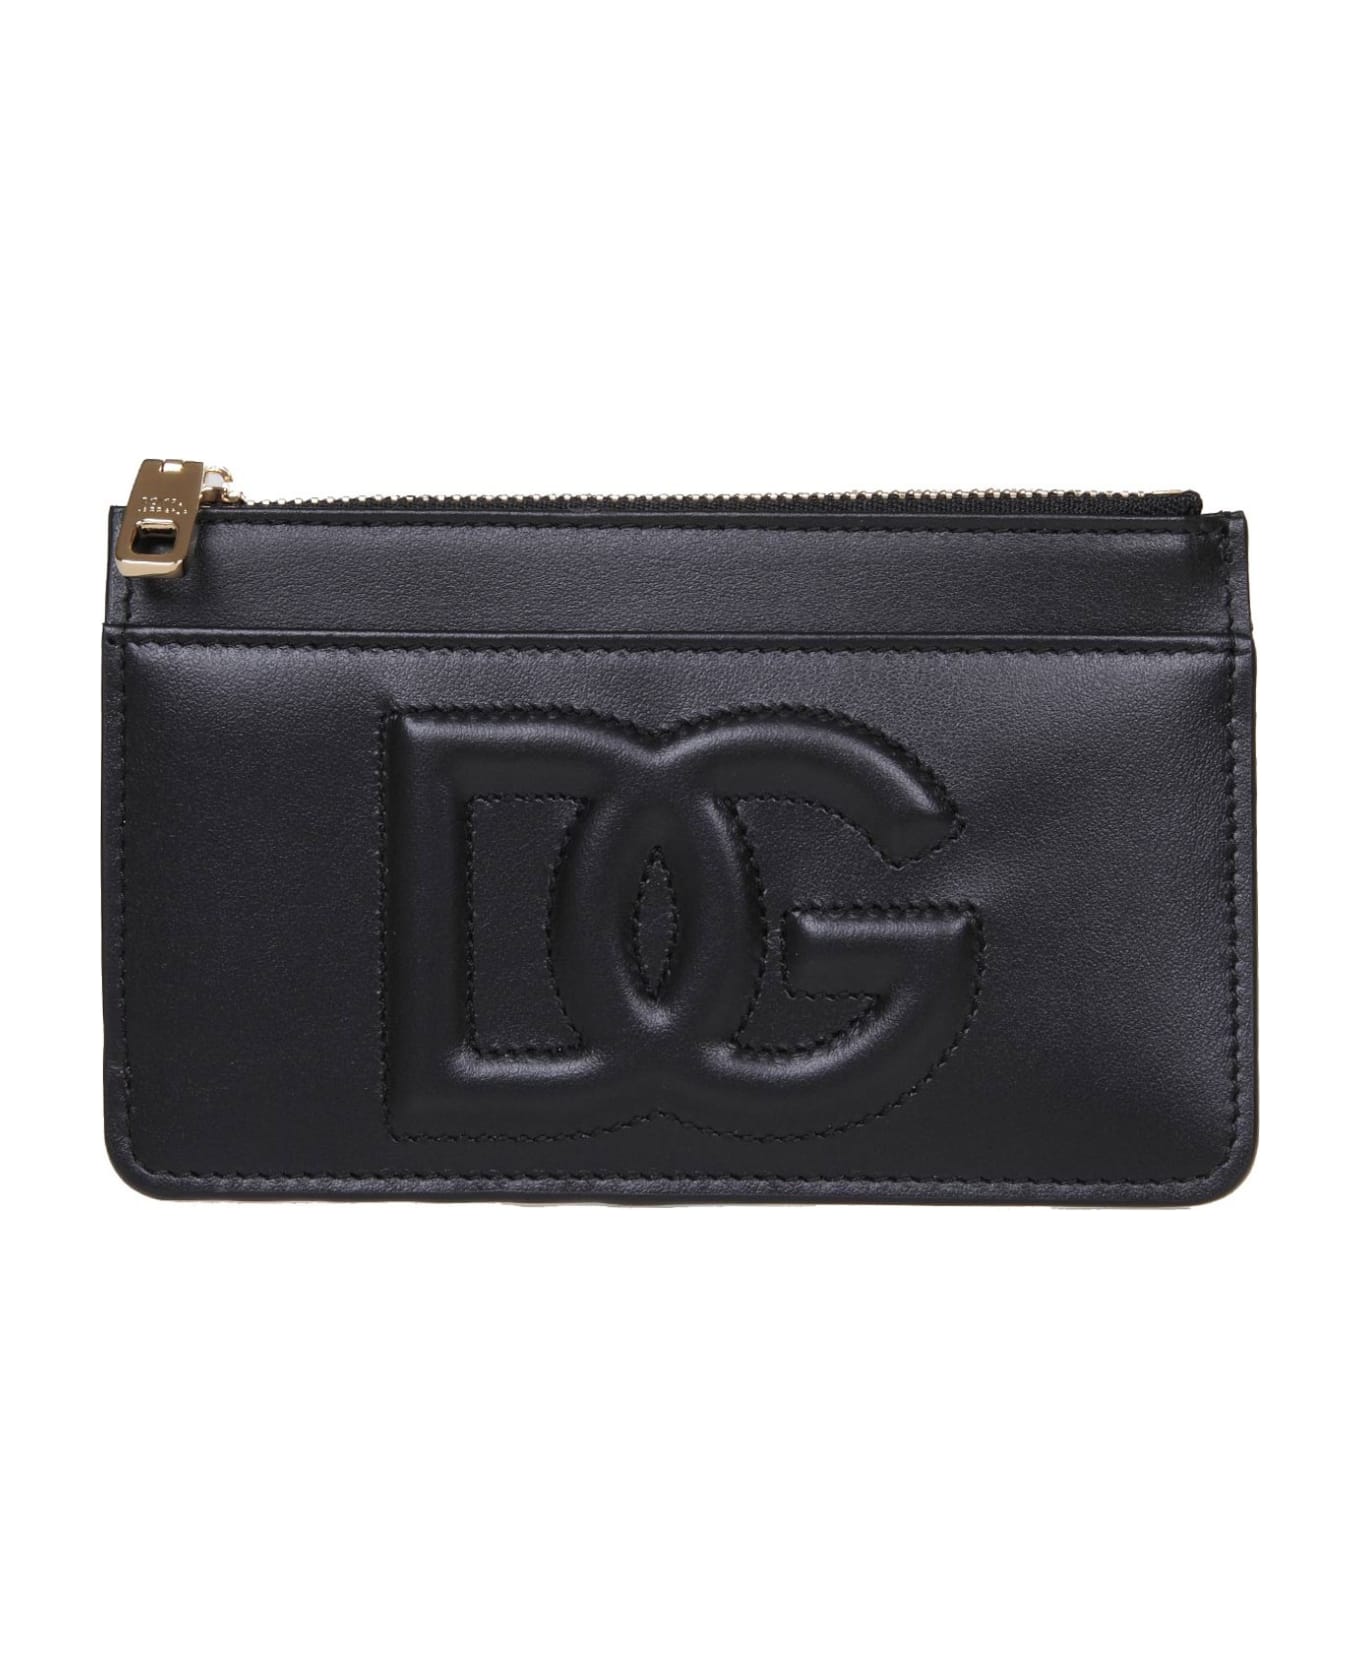 Dolce & Gabbana Card Holder In Black Leather - Nero